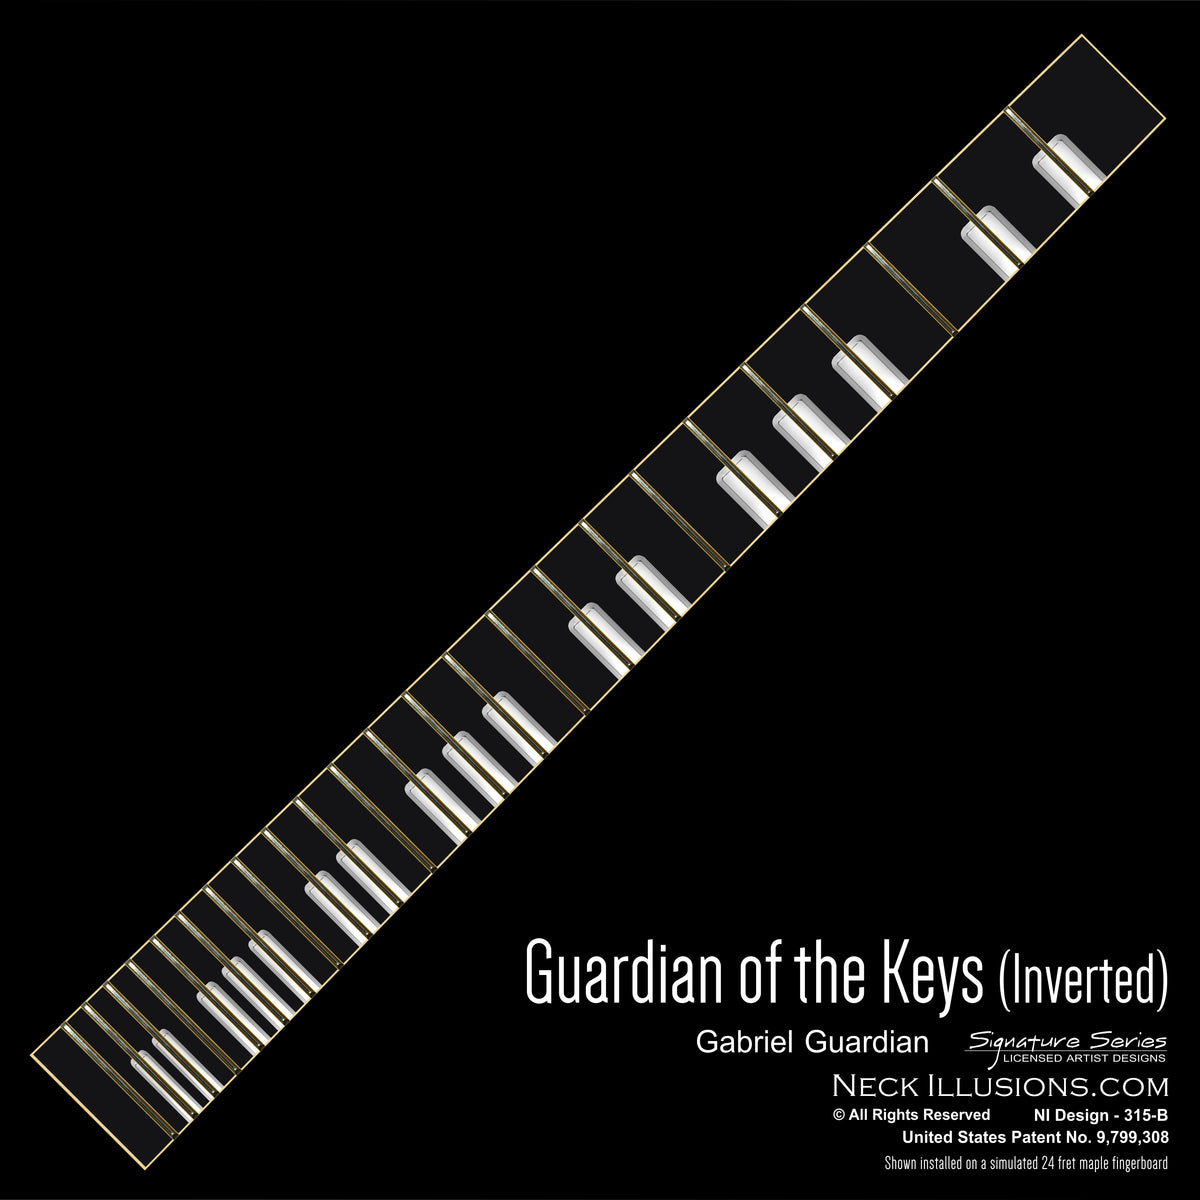 Gabriel Guardian - Guardian of the Keys